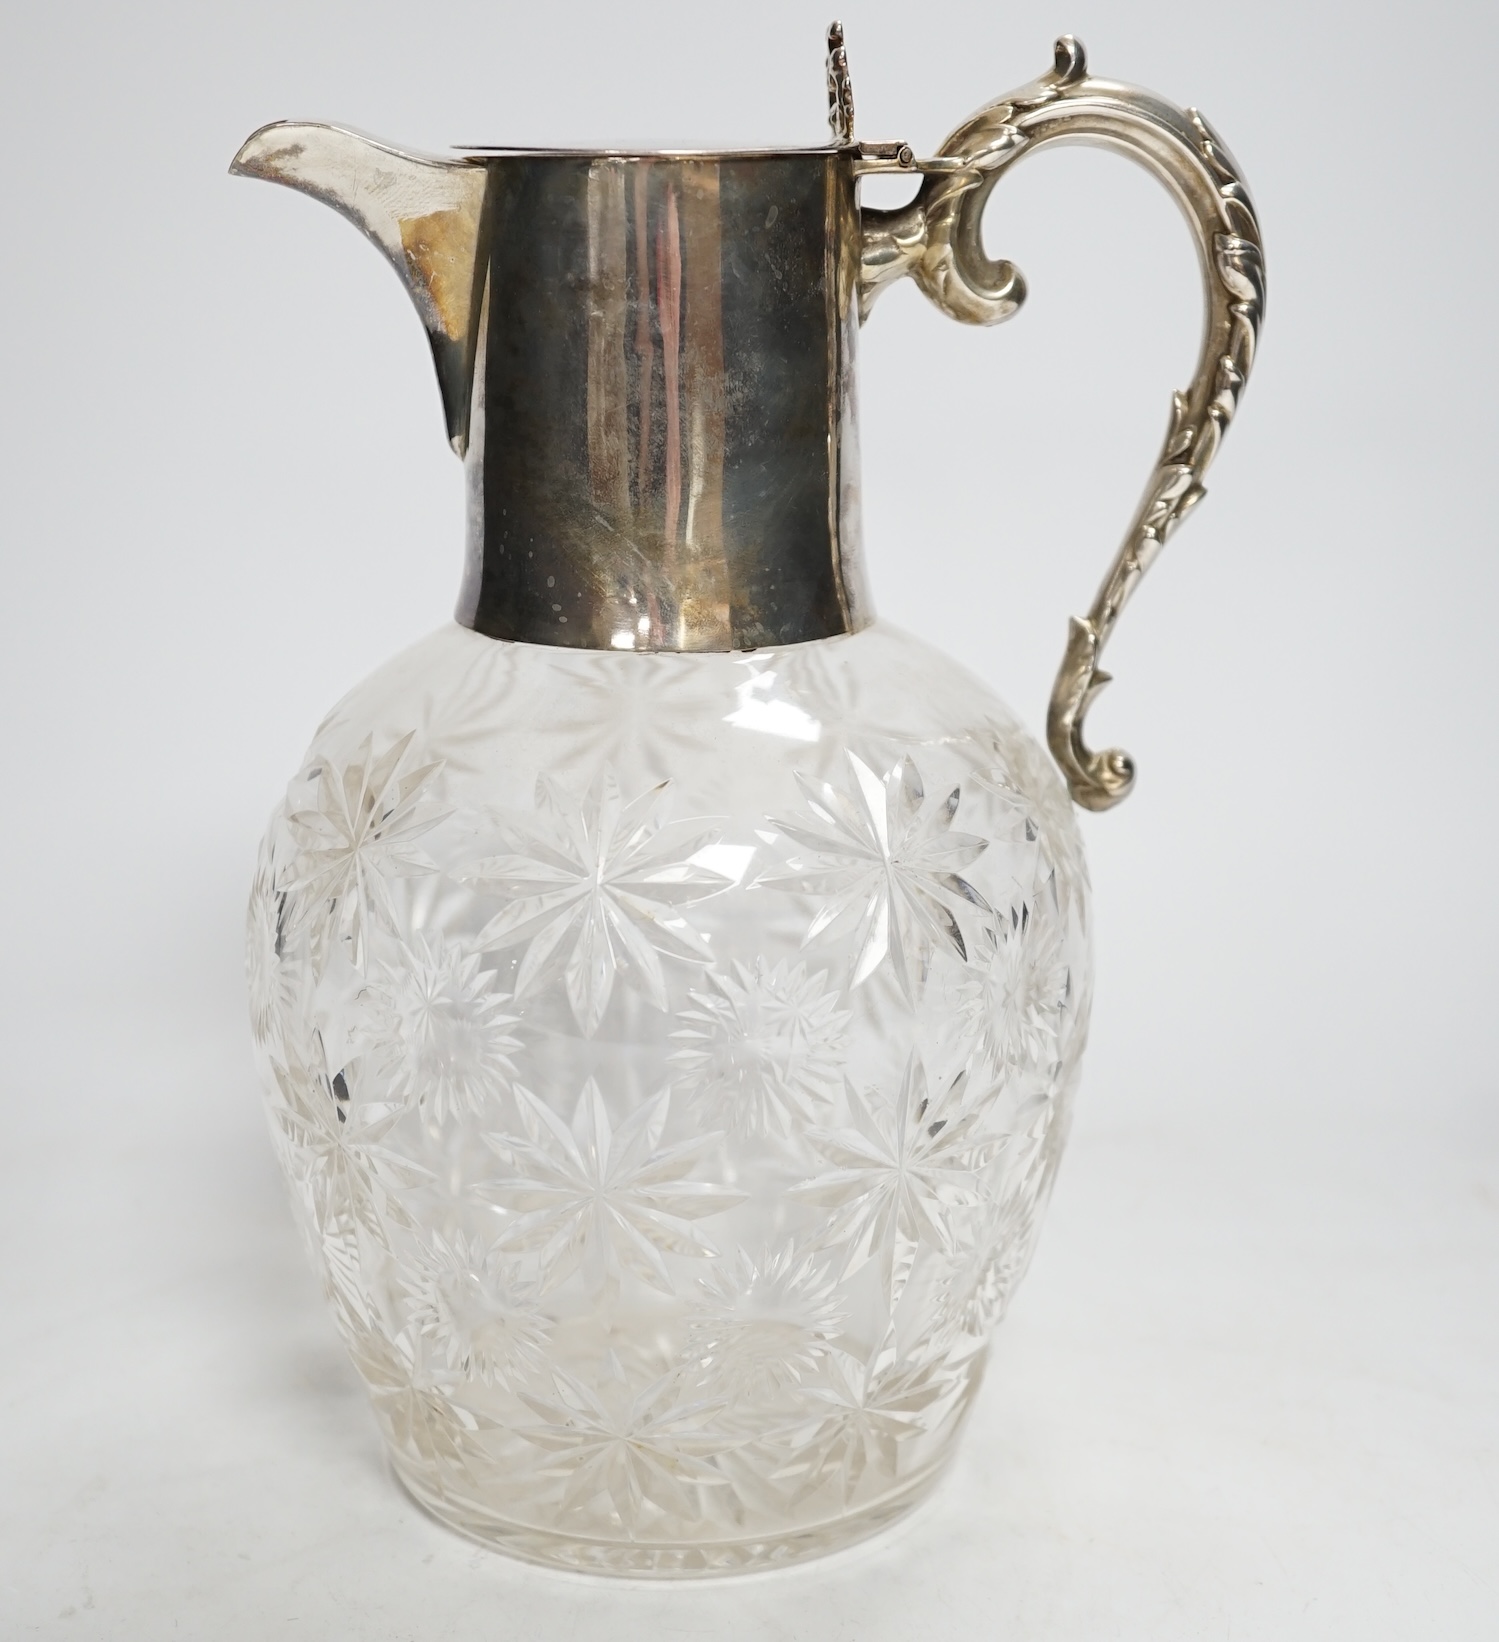 An Edwardian silver mounted cut glass claret jug, William Hutton & Sons, London, 1903, 21.8cm.